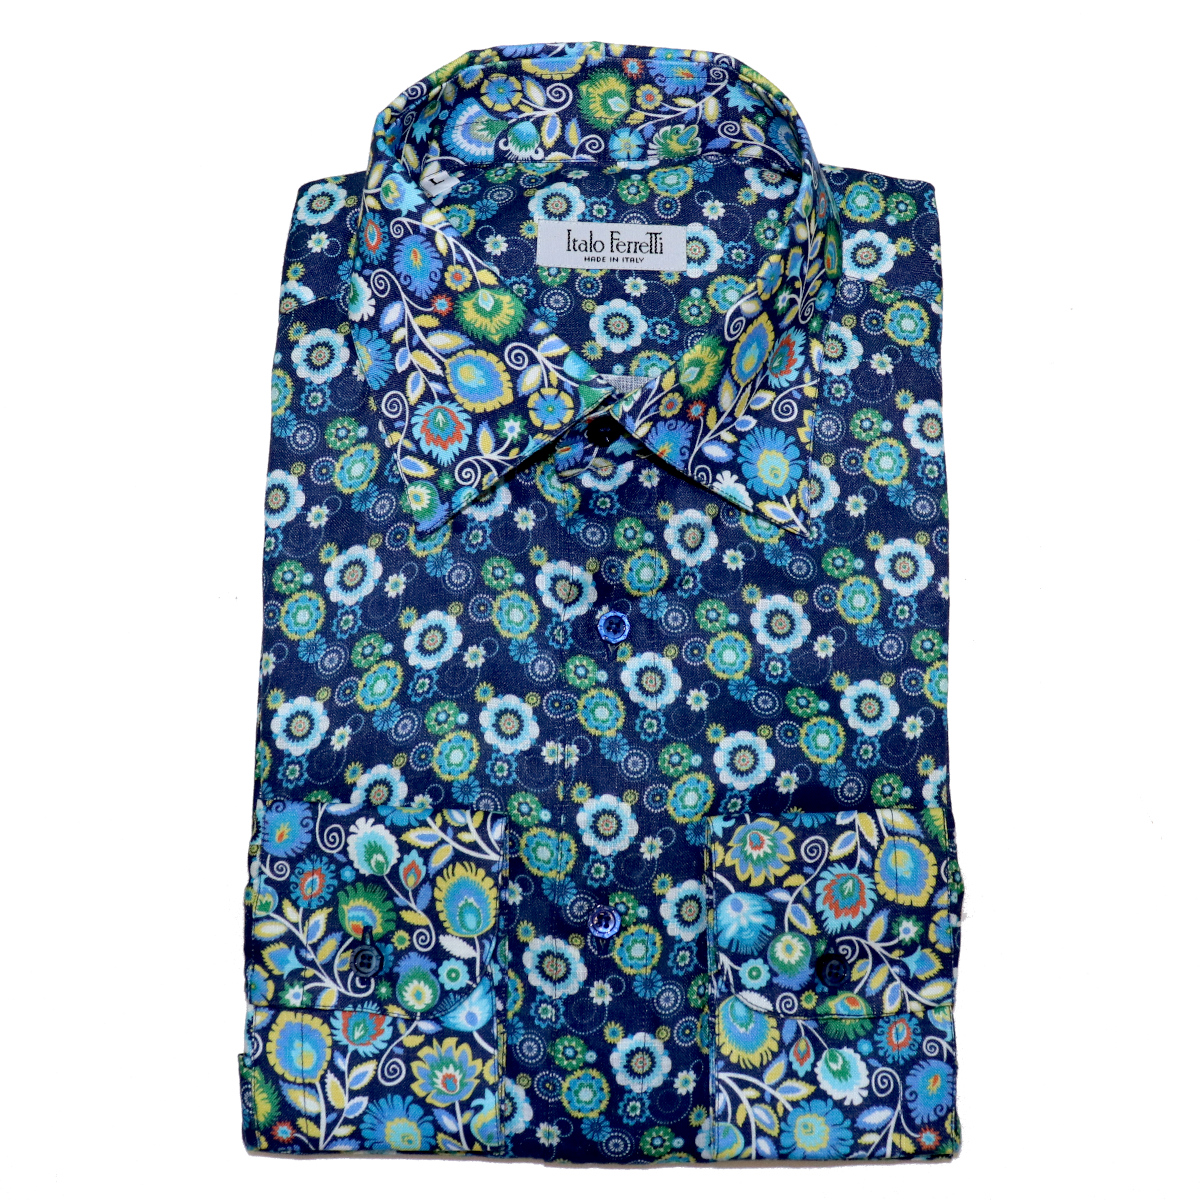 Blue linen shirt, floral pattern, handmade in Italy - Italo Ferretti ...